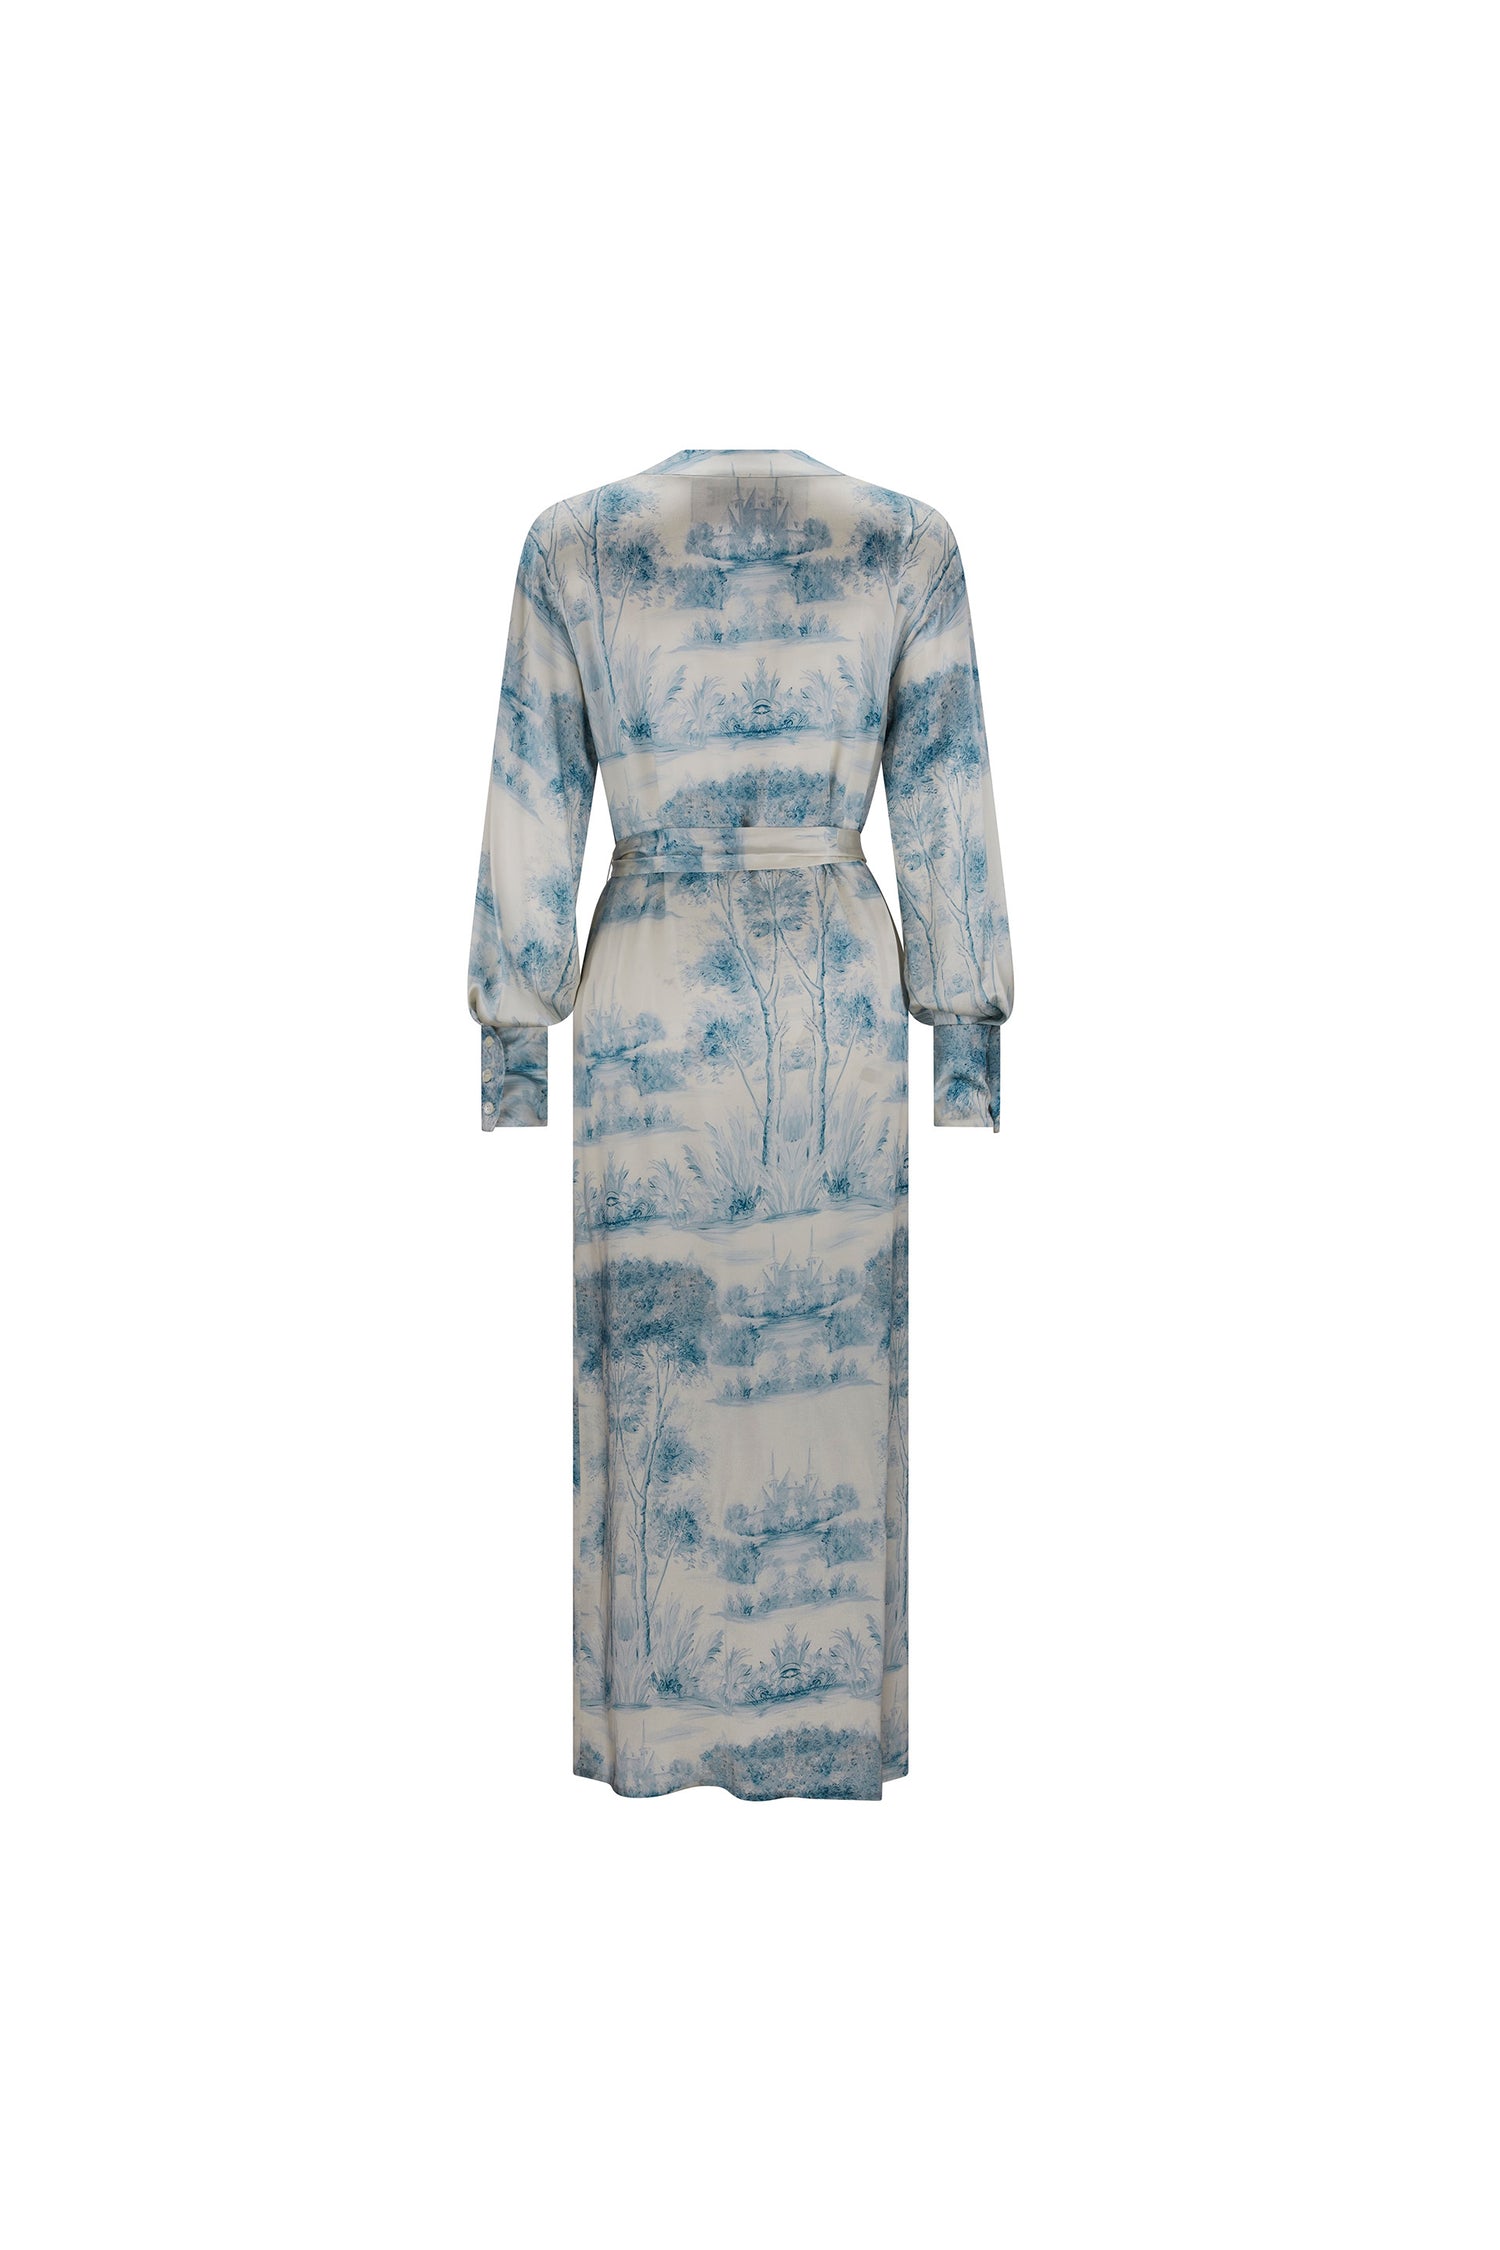 'Blue Pastoral' Robe Dress -  - Libertine